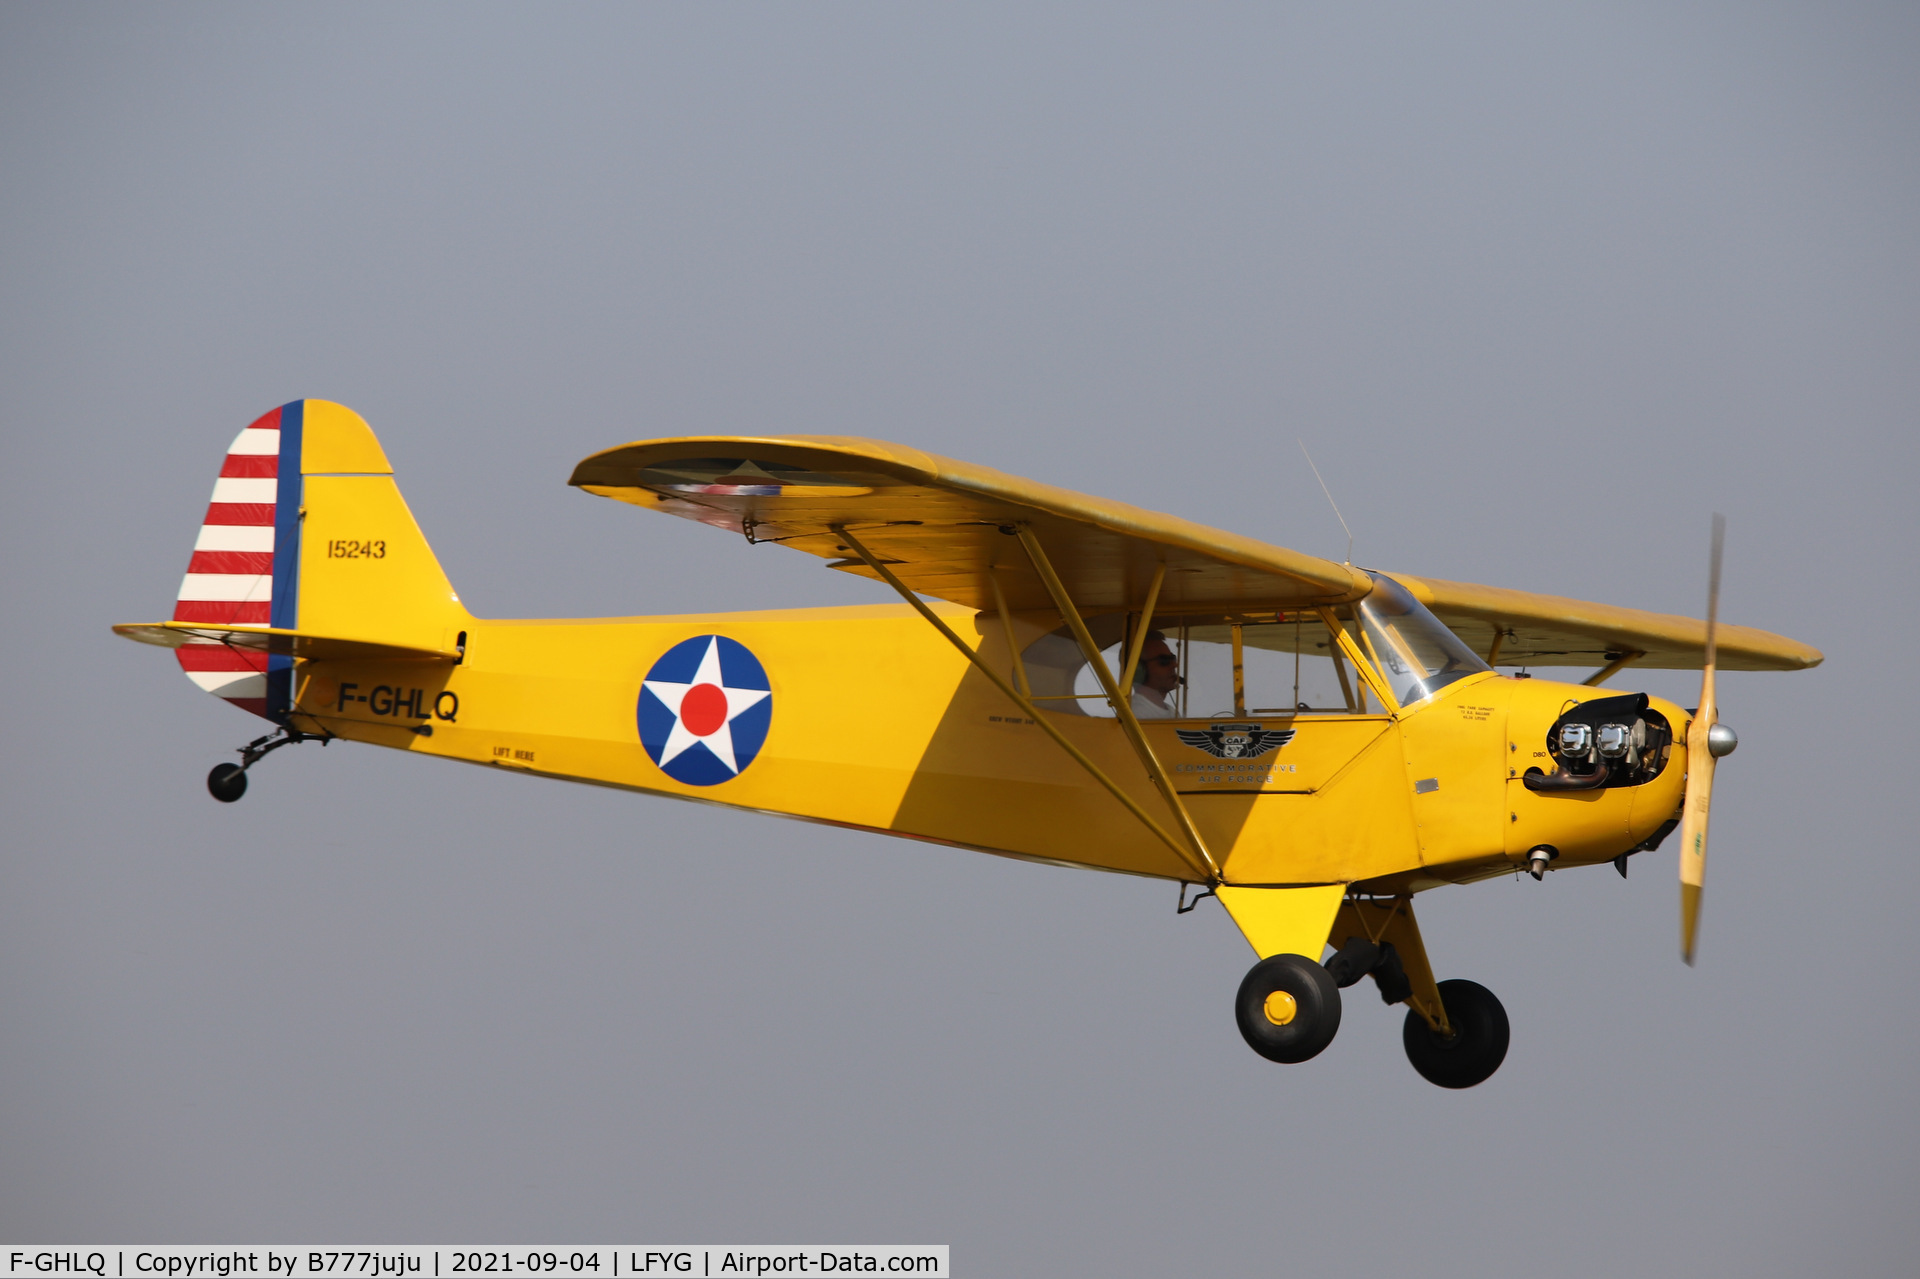 F-GHLQ, Piper J3C-65 Cub Cub C/N 15243, Cambrai airshow 2021